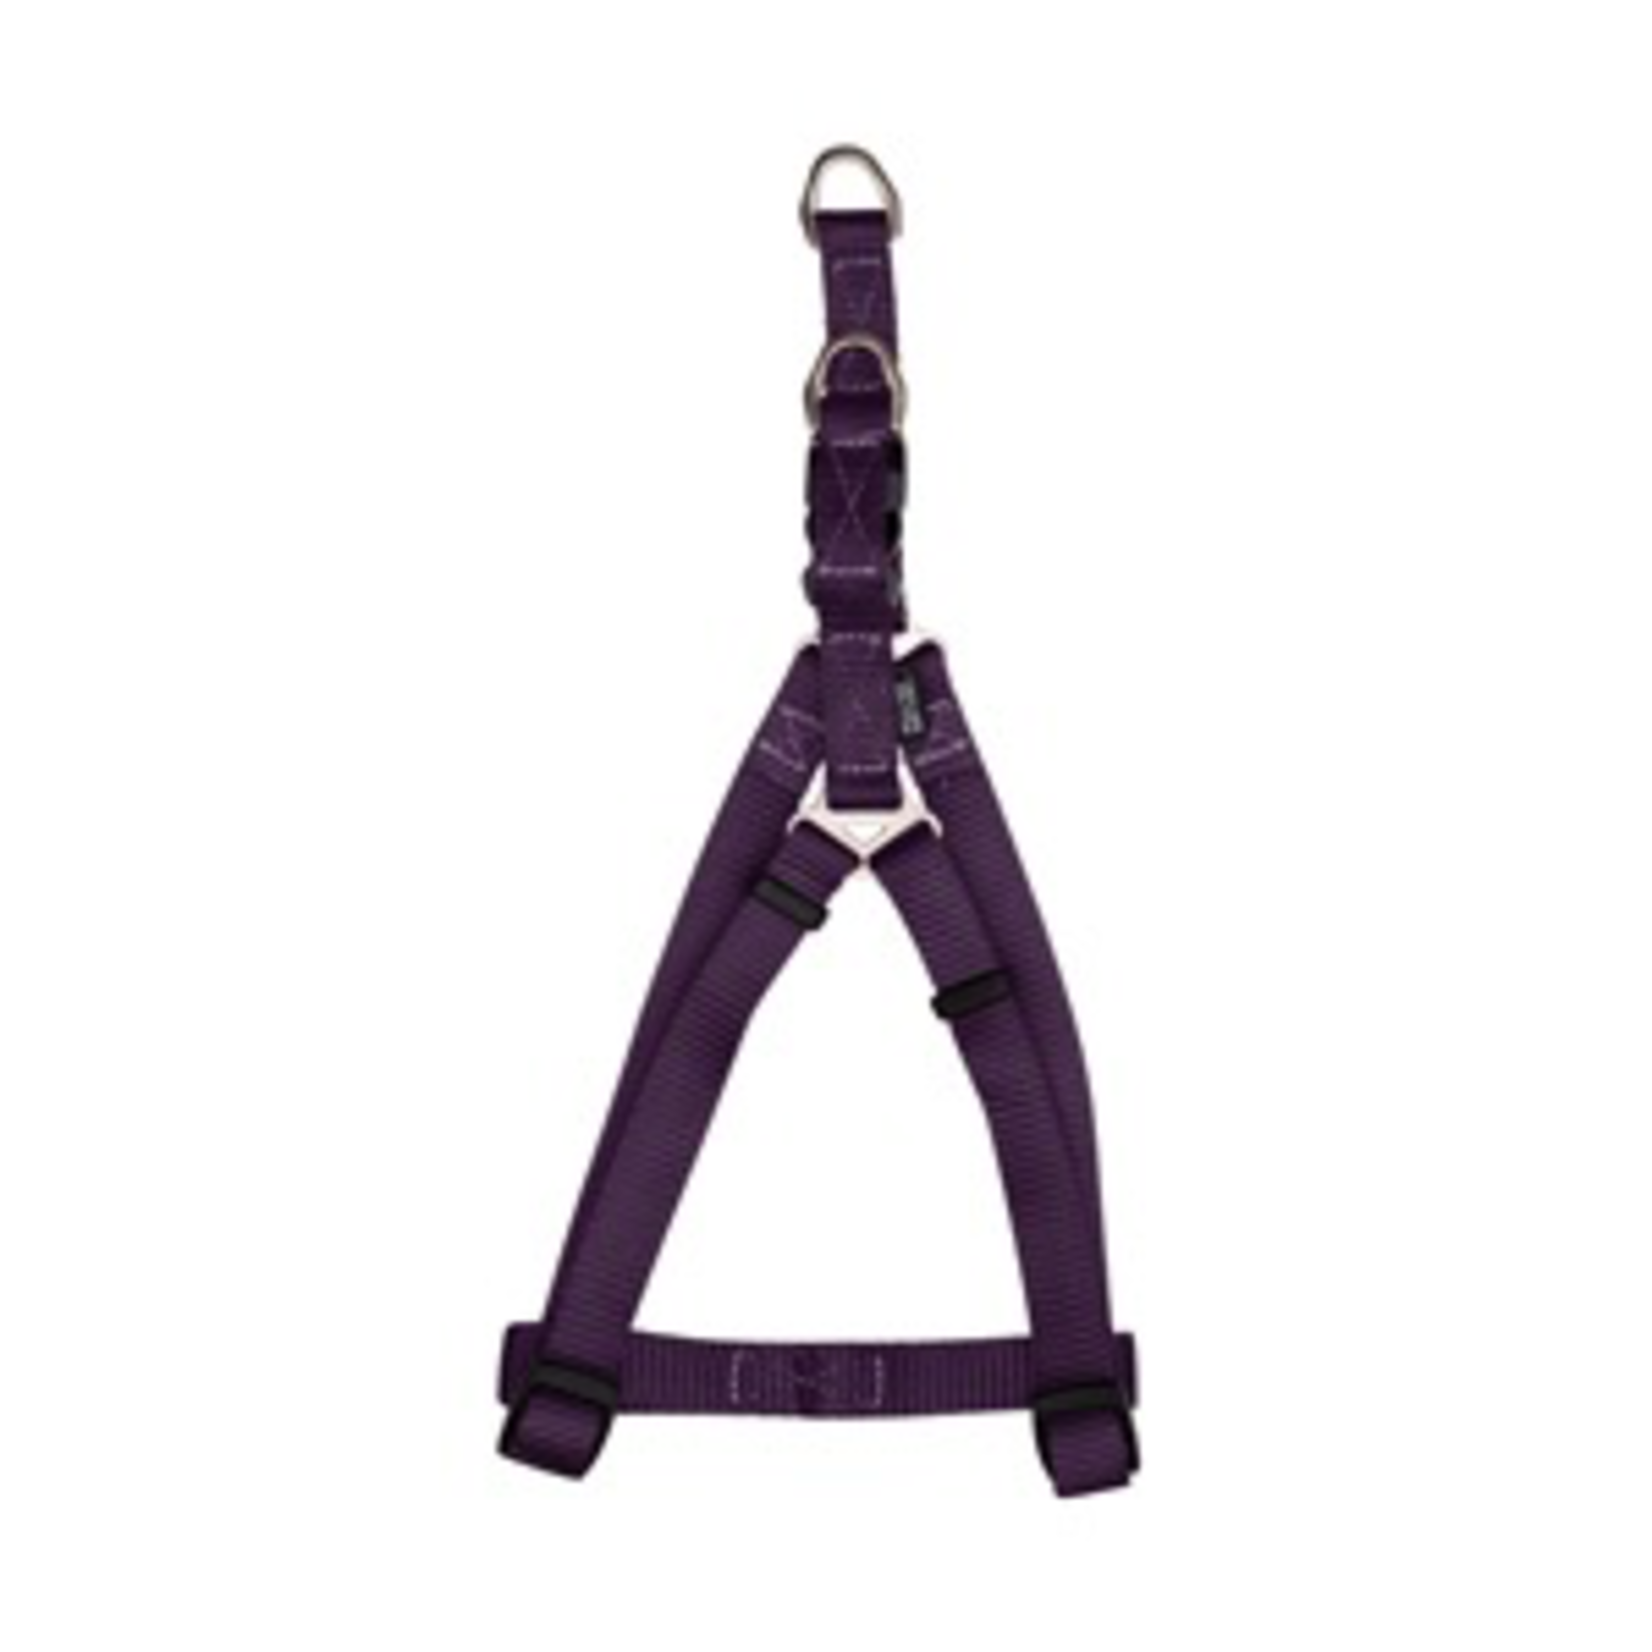 ZEUS Zeus Nylon Step-In Dog Harness - Royal Purple - Small - 1 cm x 33 cm-45 cm (3/8" x 13"-18")